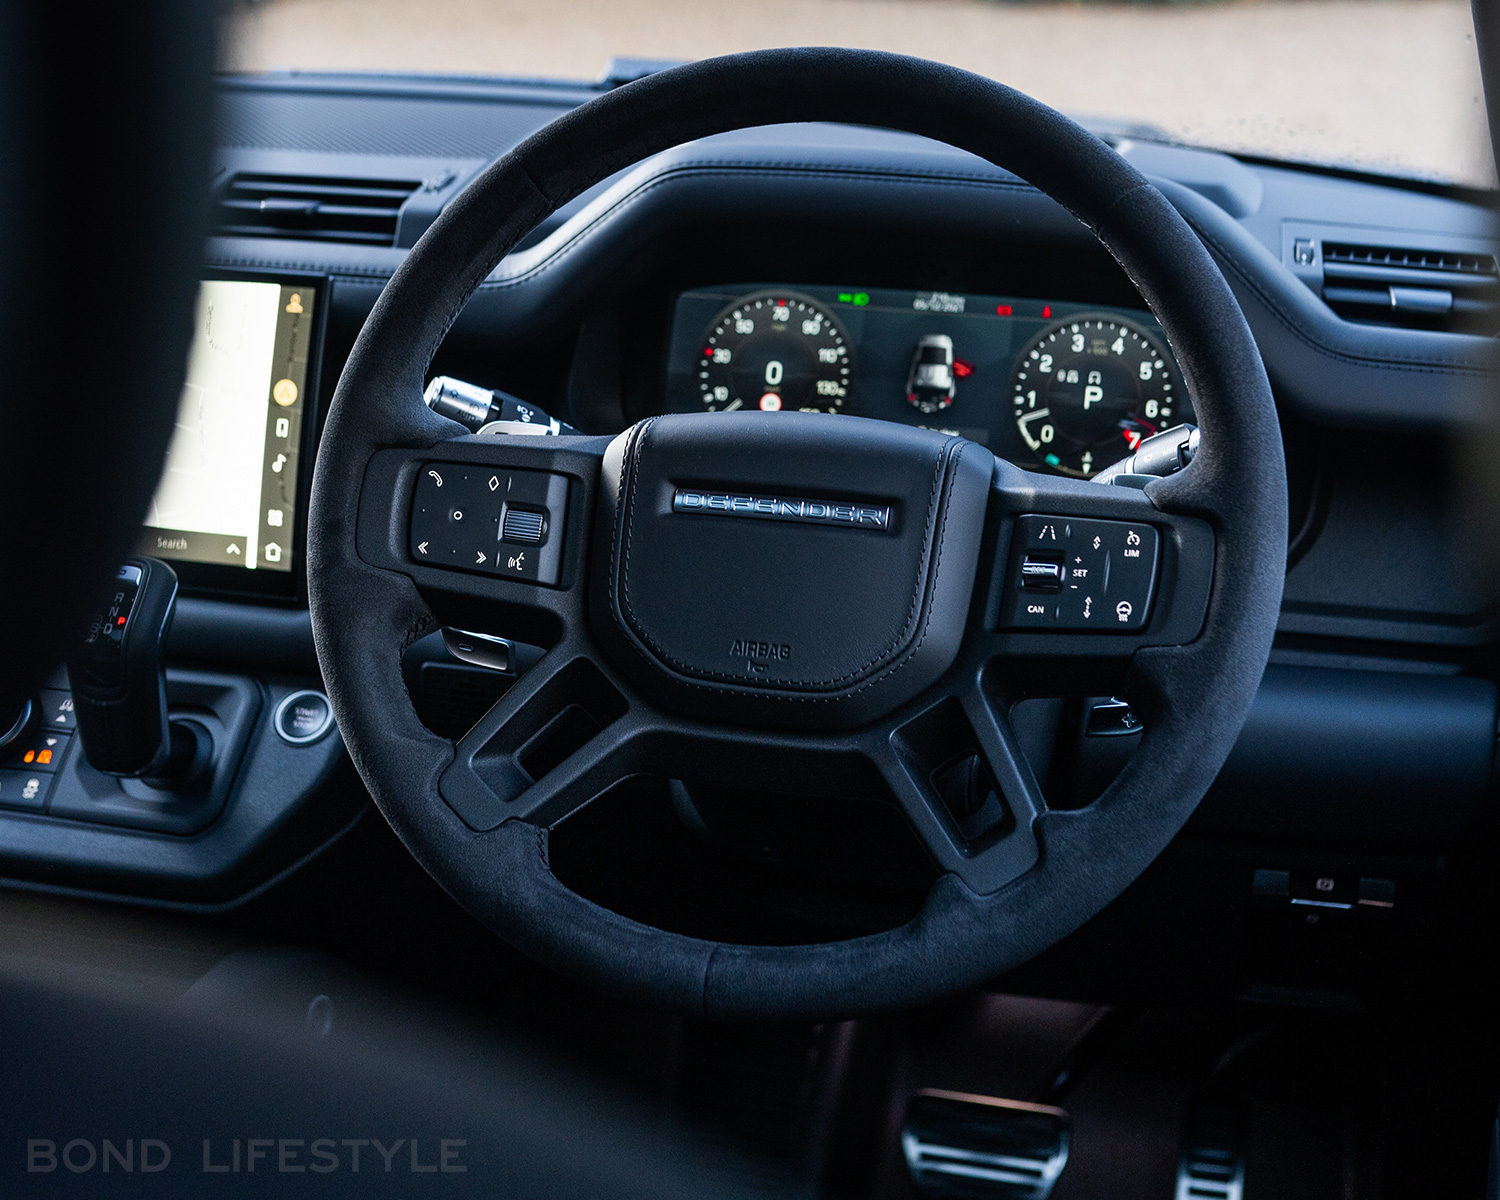 Land Rover Defender 110 James Bond Edition For Sale interior dashboard